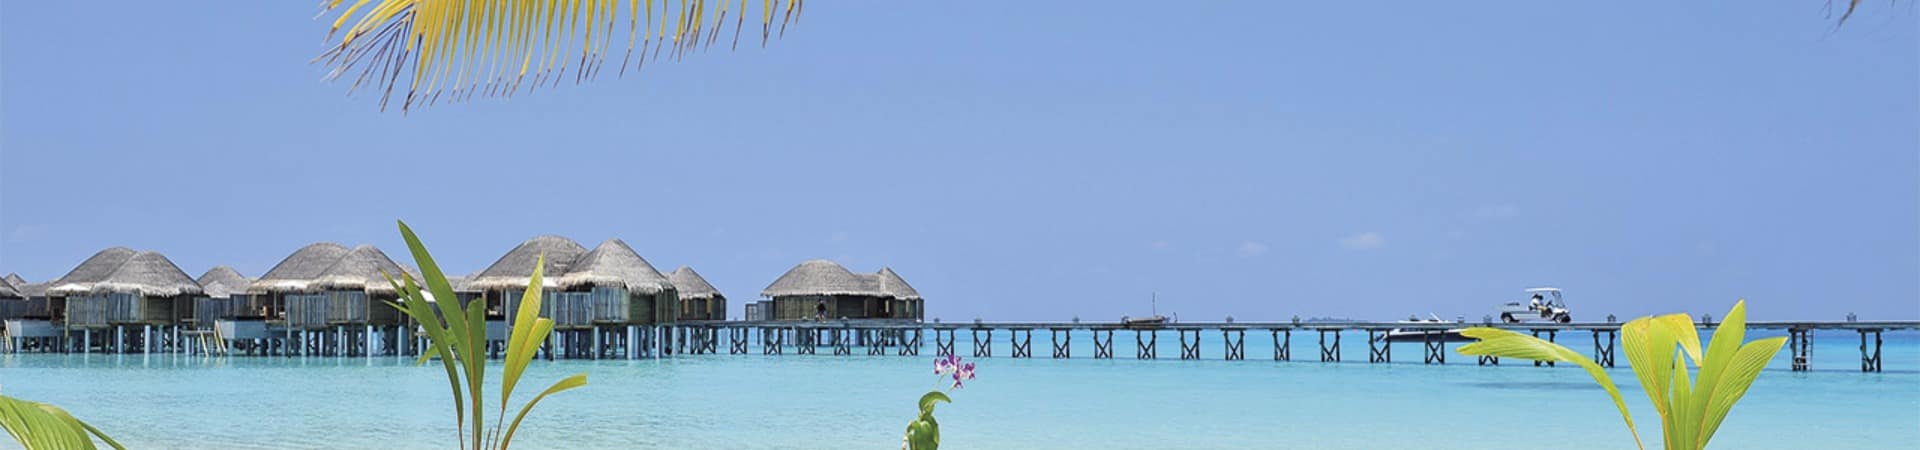 Constance halaveli maldives praia